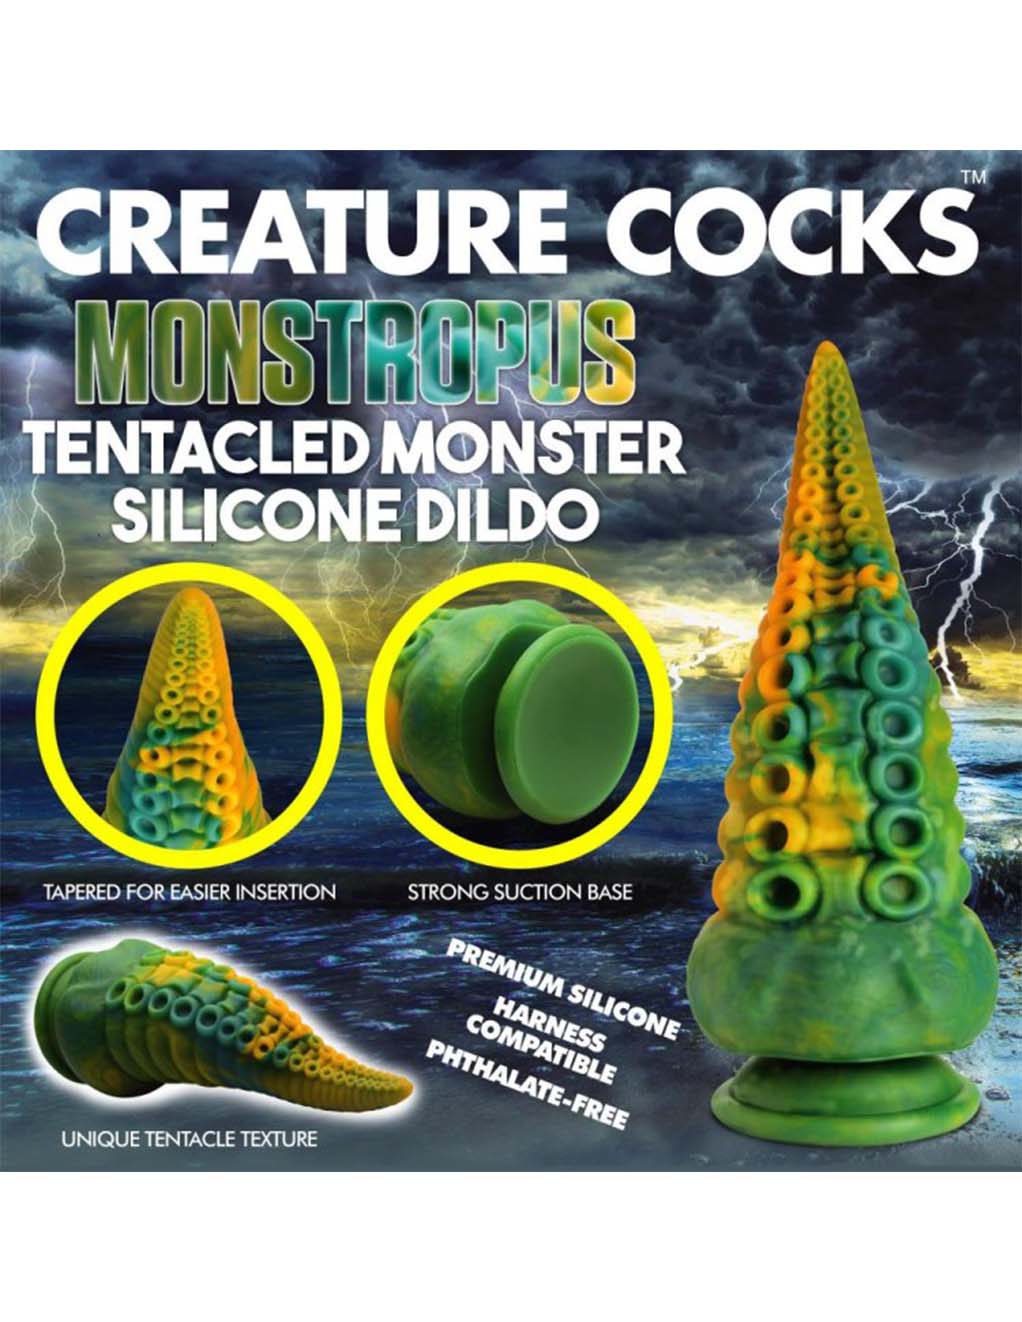 Creature Cocks Monstropus- Features